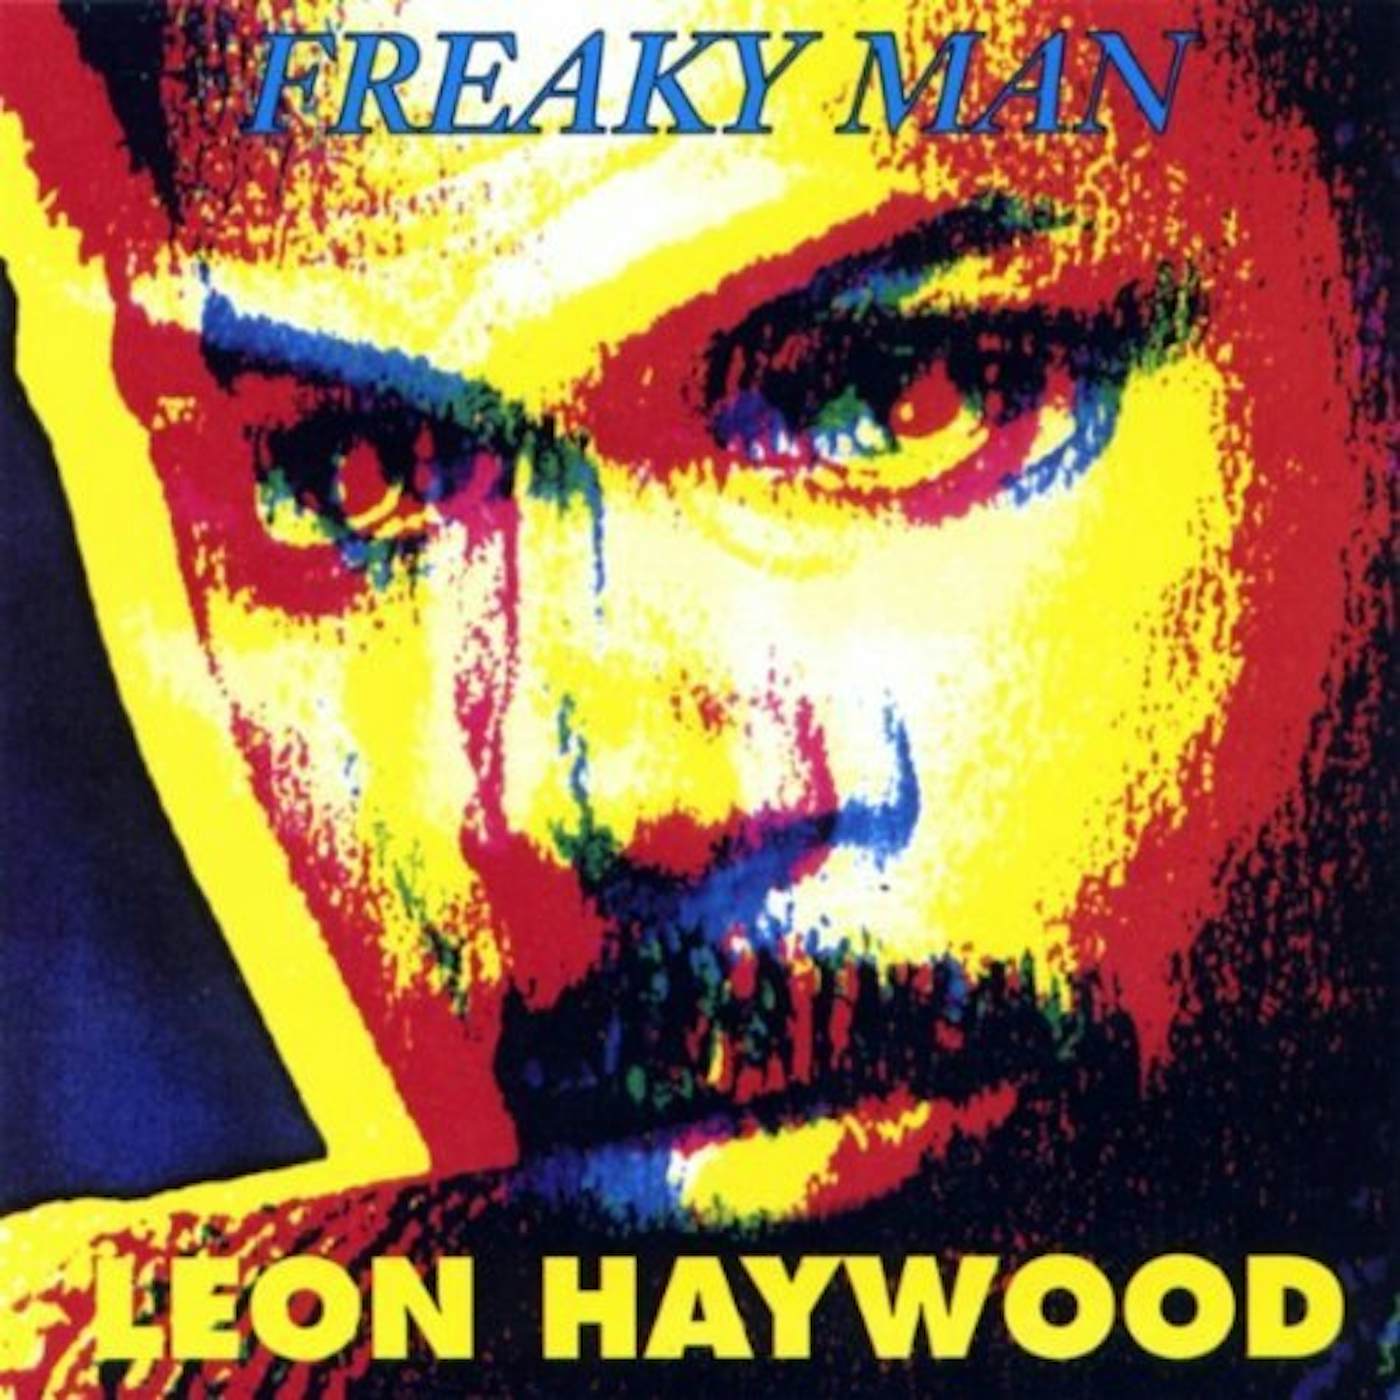 Leon Haywood FREAKY MAN CD